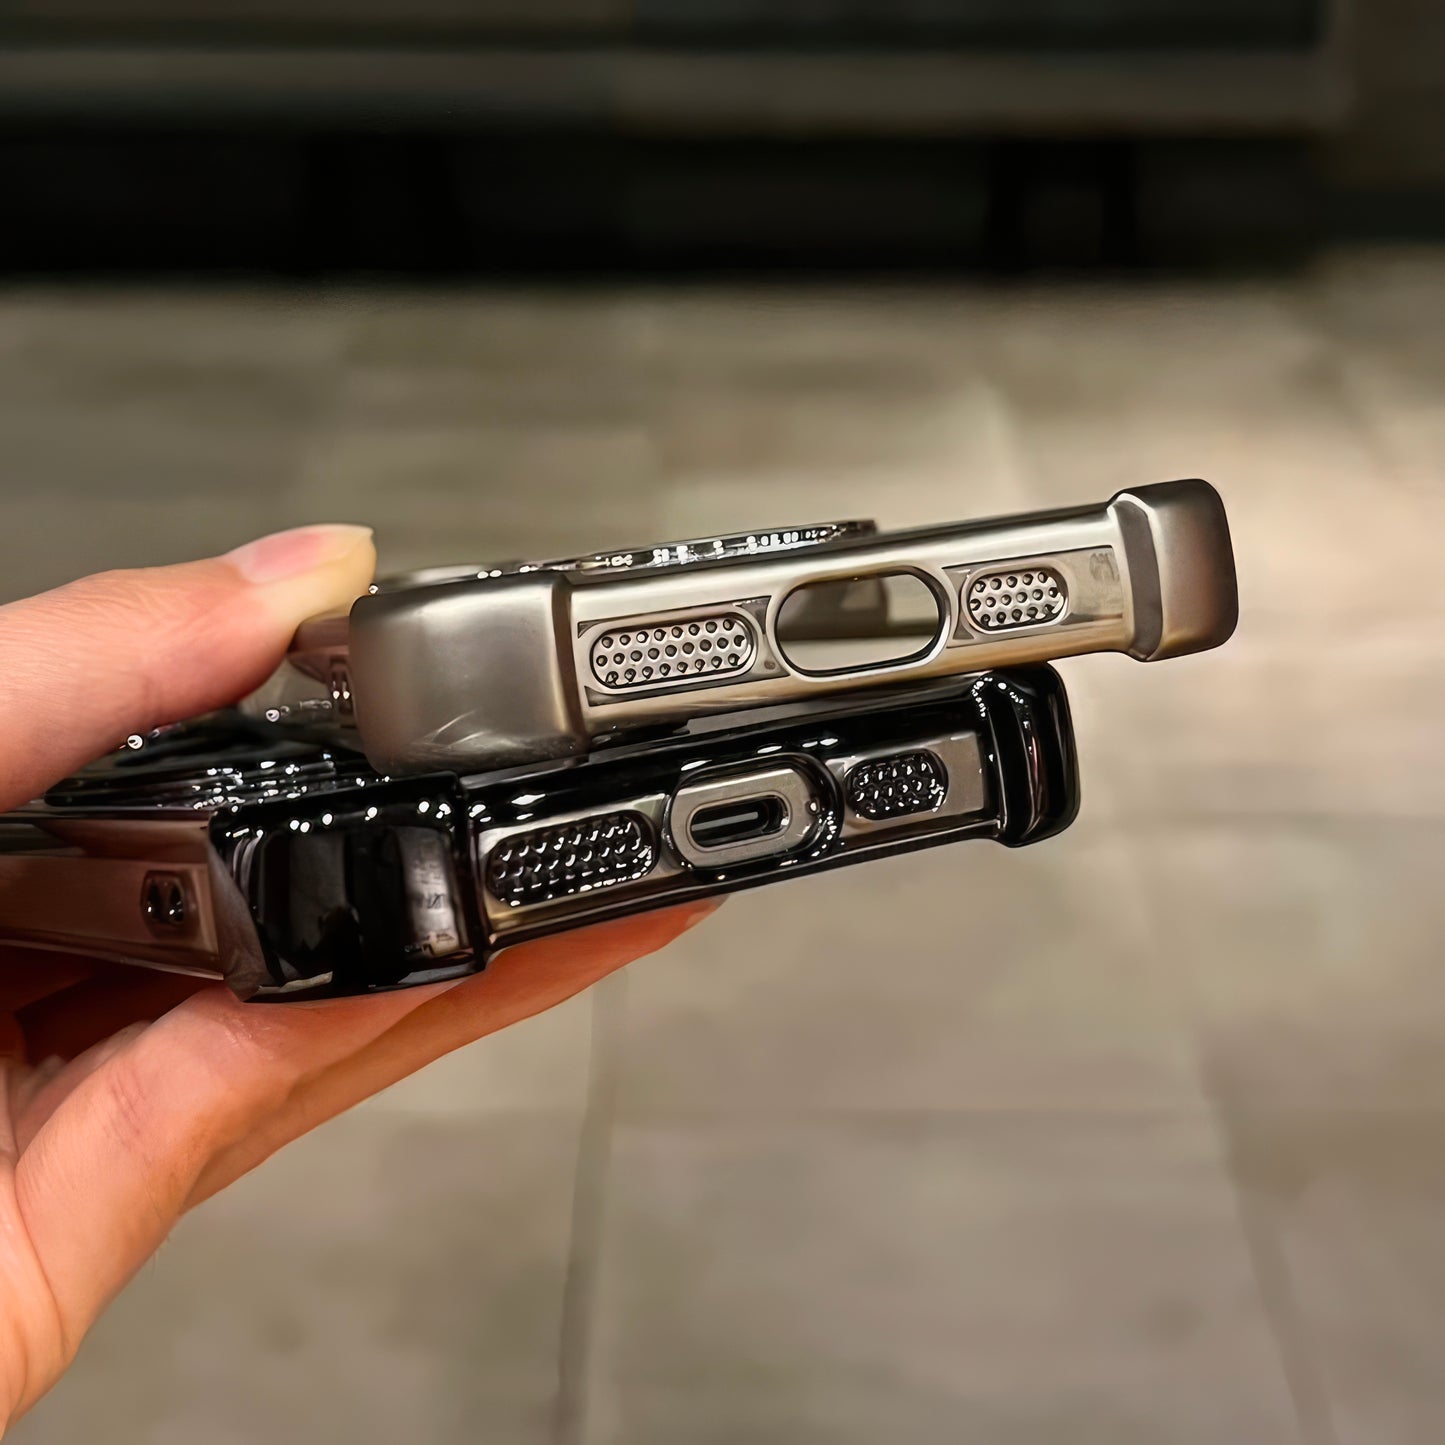 Coque Luxe 14 pro max brillante avec support et protection de caméra intégrée /  غطاء لامع لآيفون 14 برو ماكس مع حامل وحماية مدمجة للكاميرا